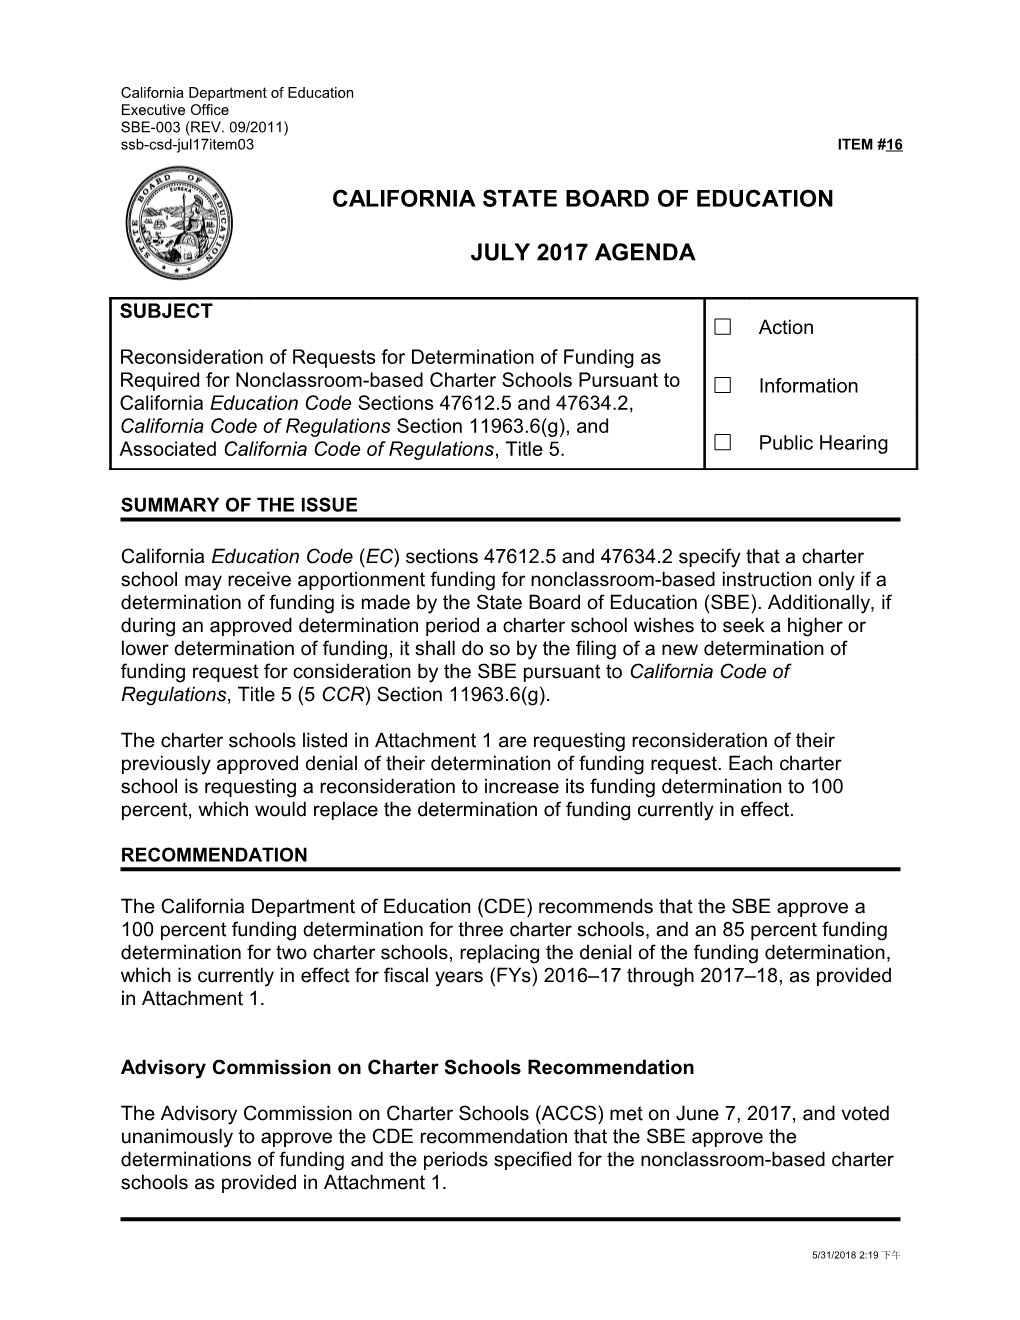 July 2017 Agenda Item 16 - Meeting Agendas (CA State Board of Education)